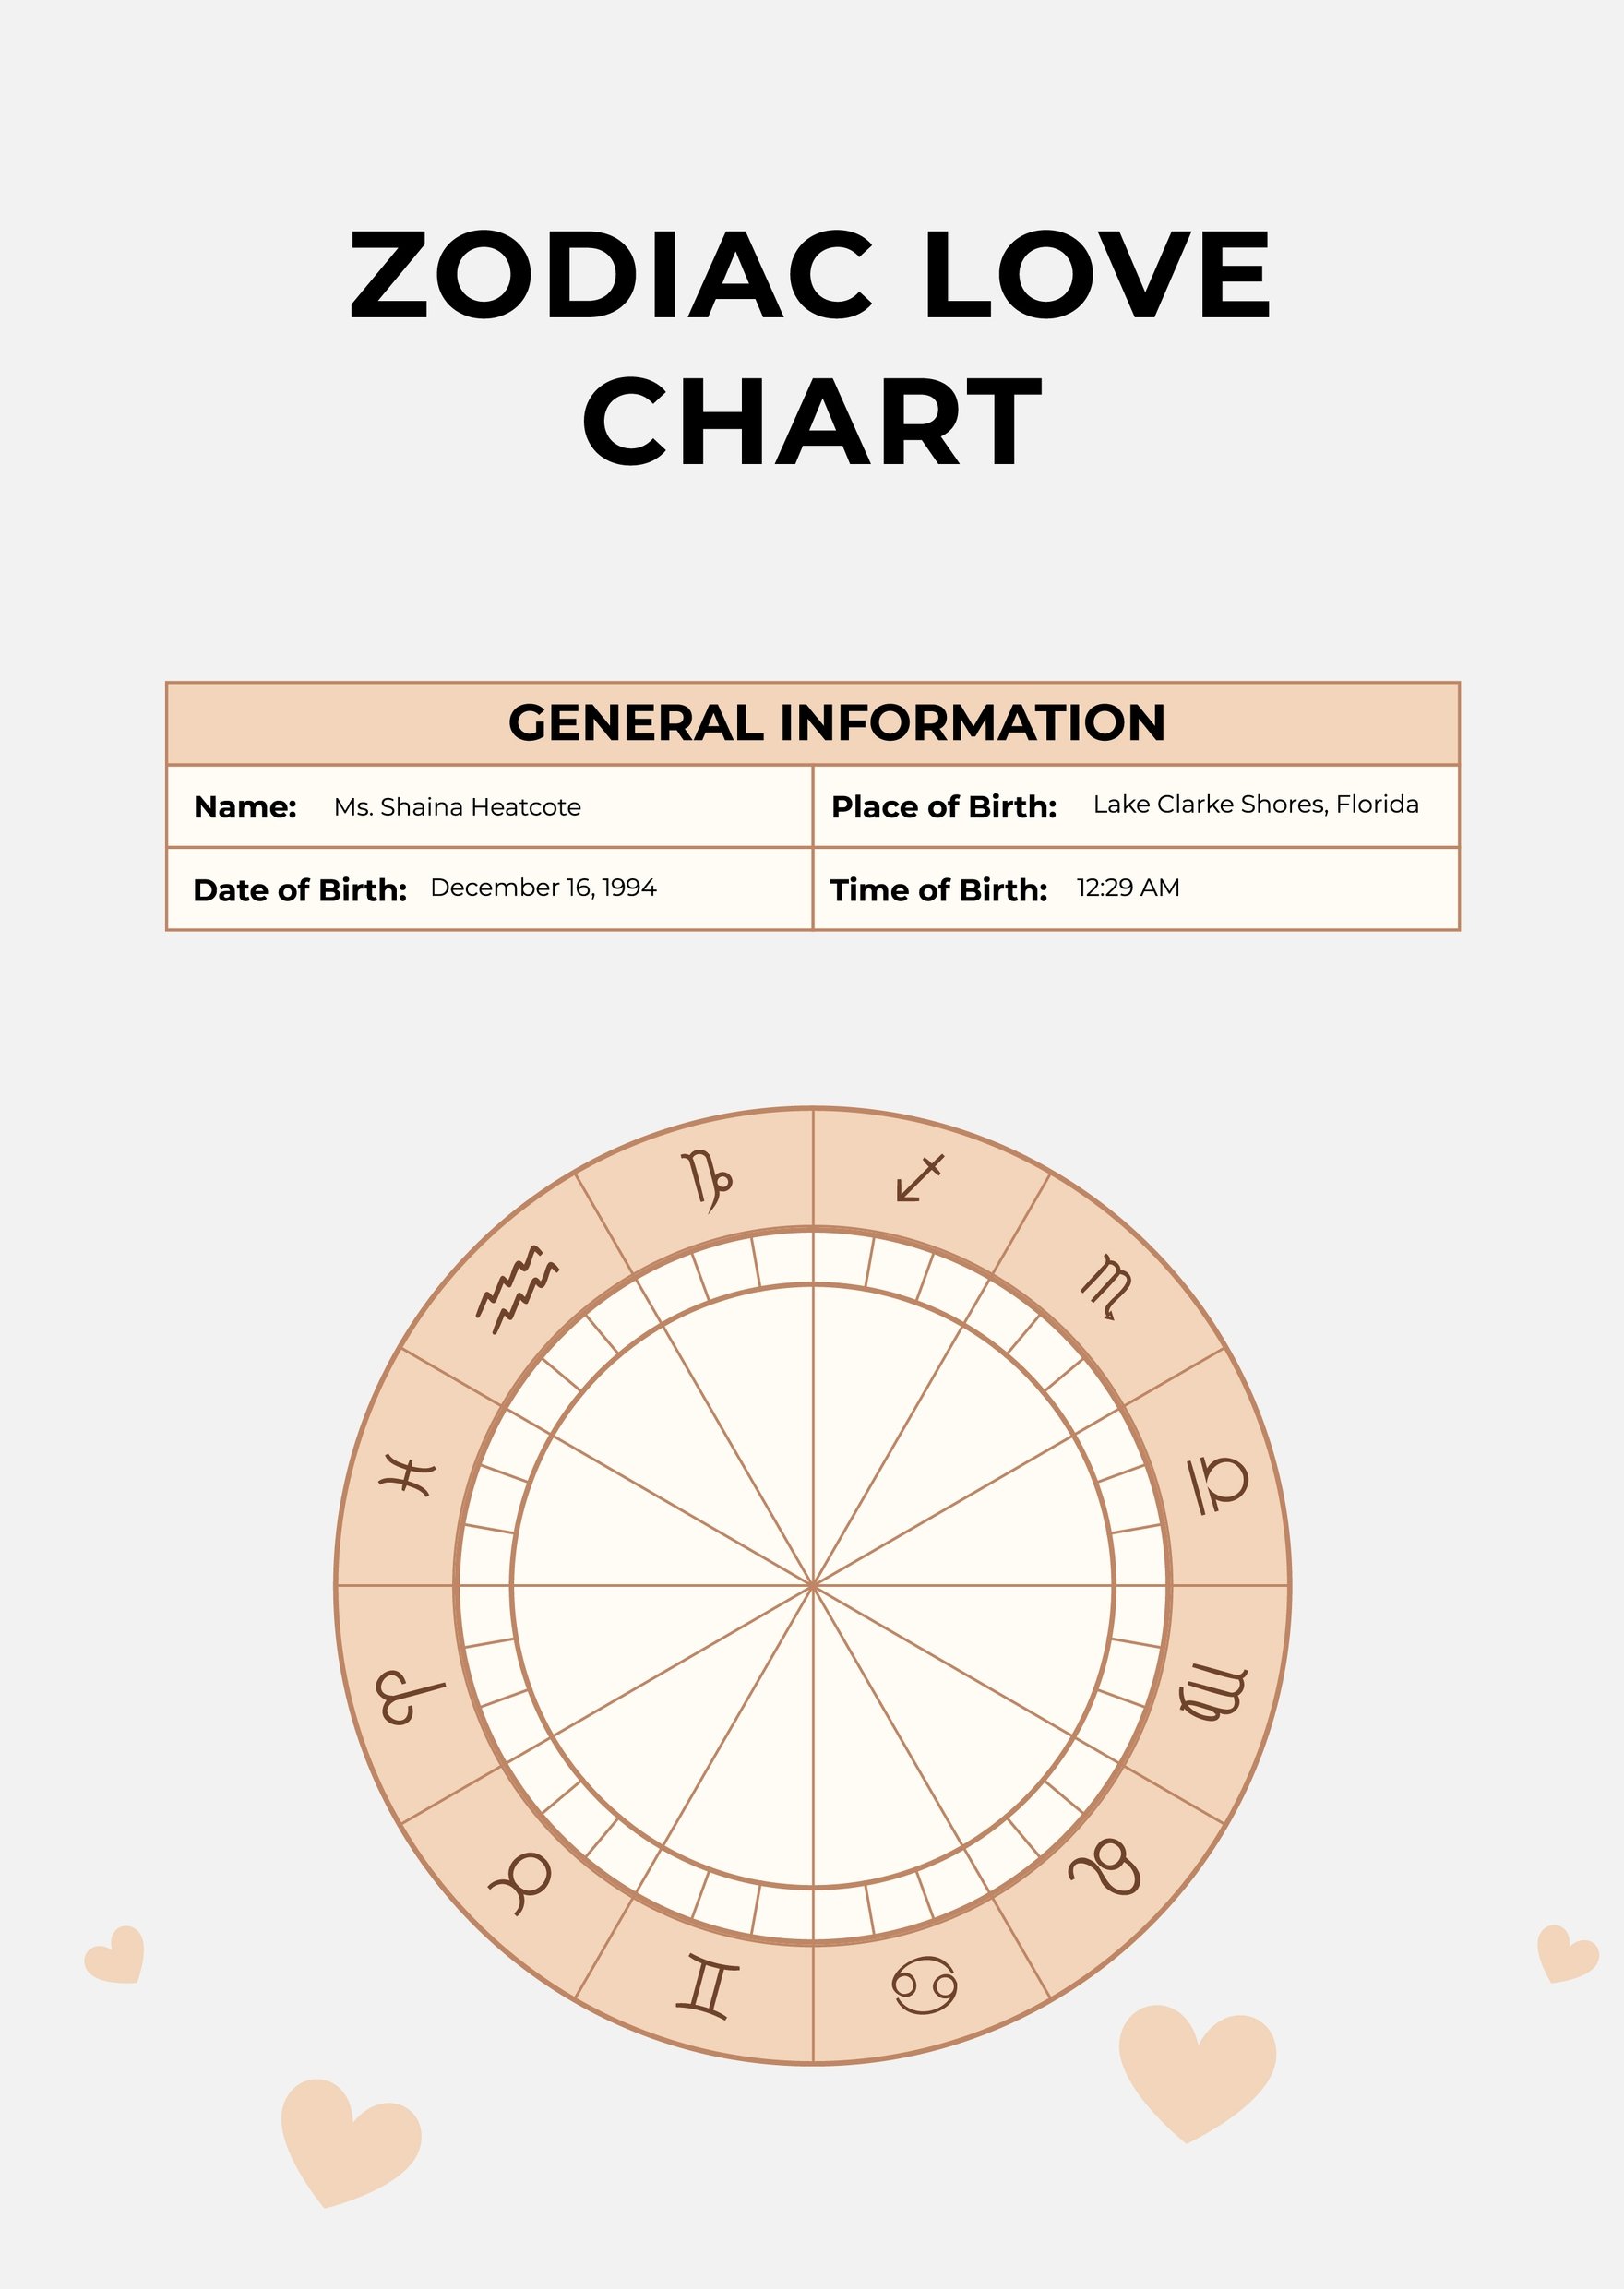 Free Zodiac Love Chart Template in PDF, Illustrator